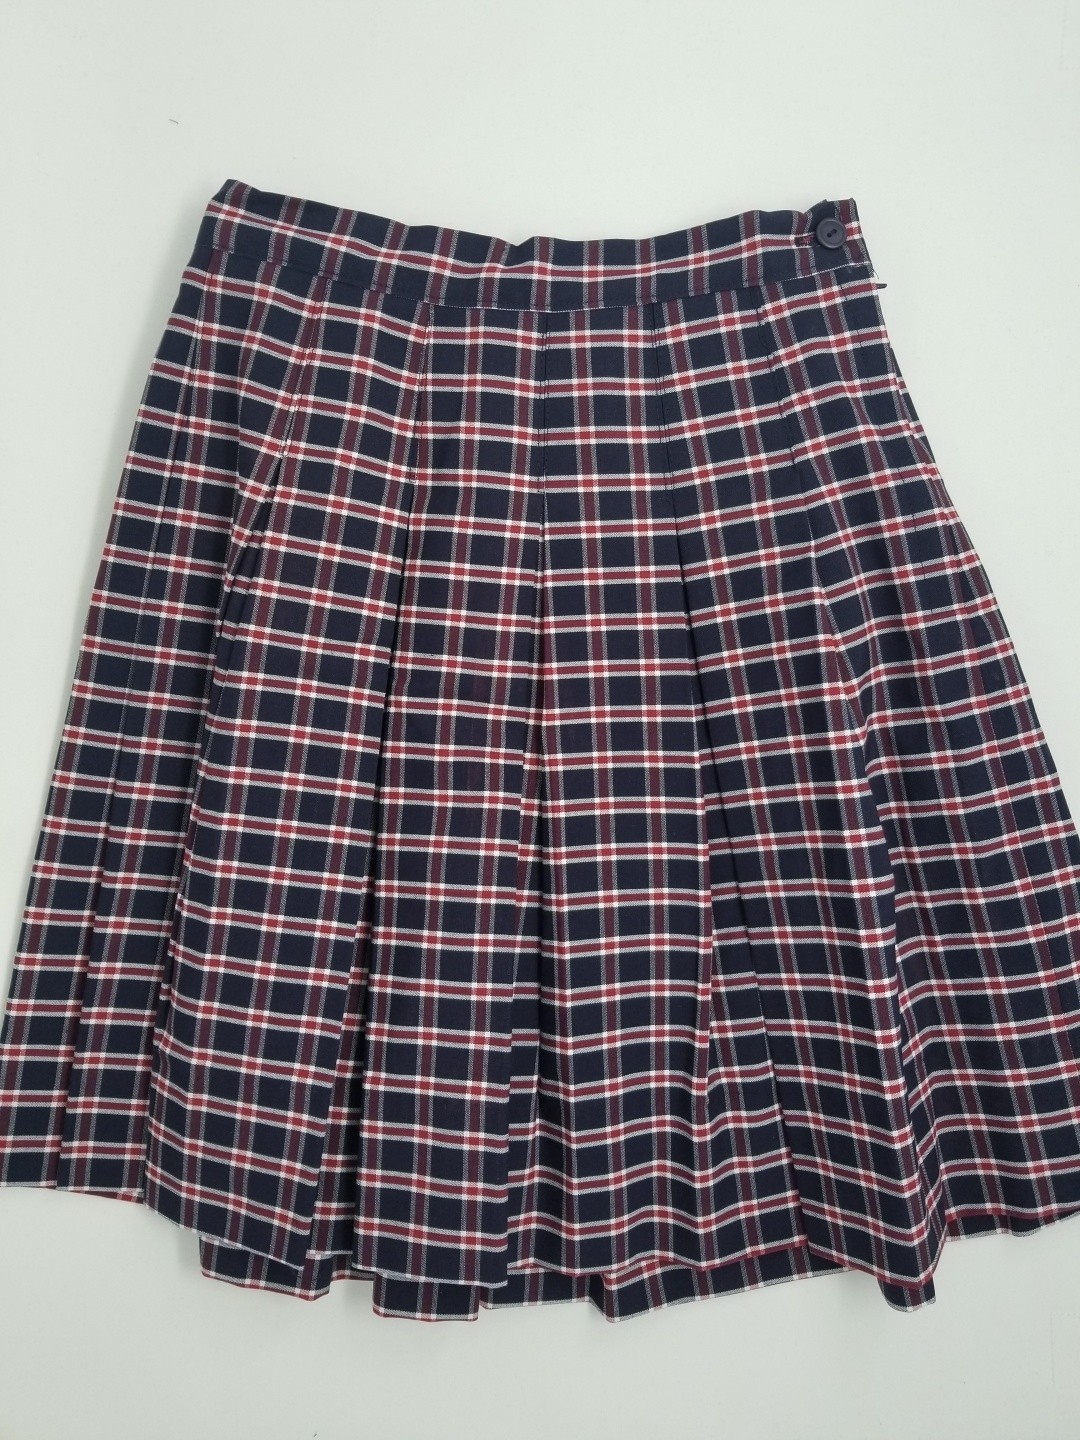 Stitch Down Pleat Skirt Style 11 Plaid 26